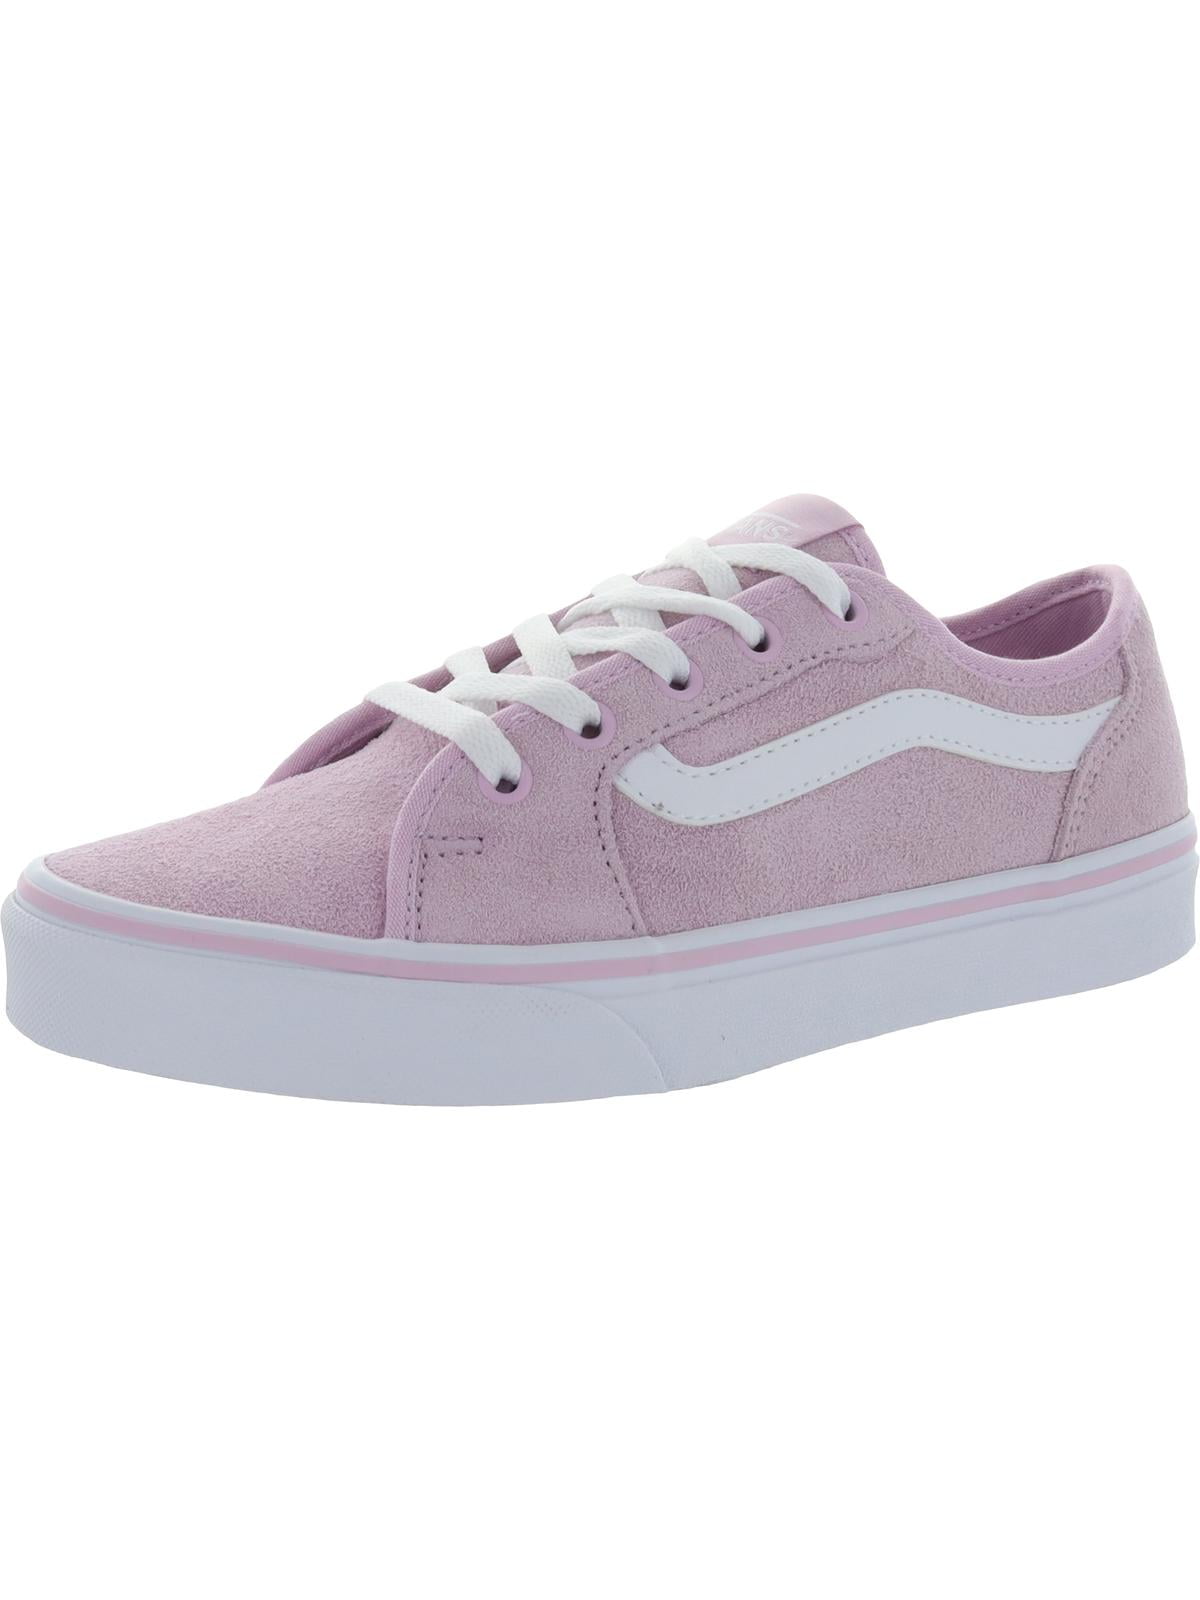 vans tennis shoes pink